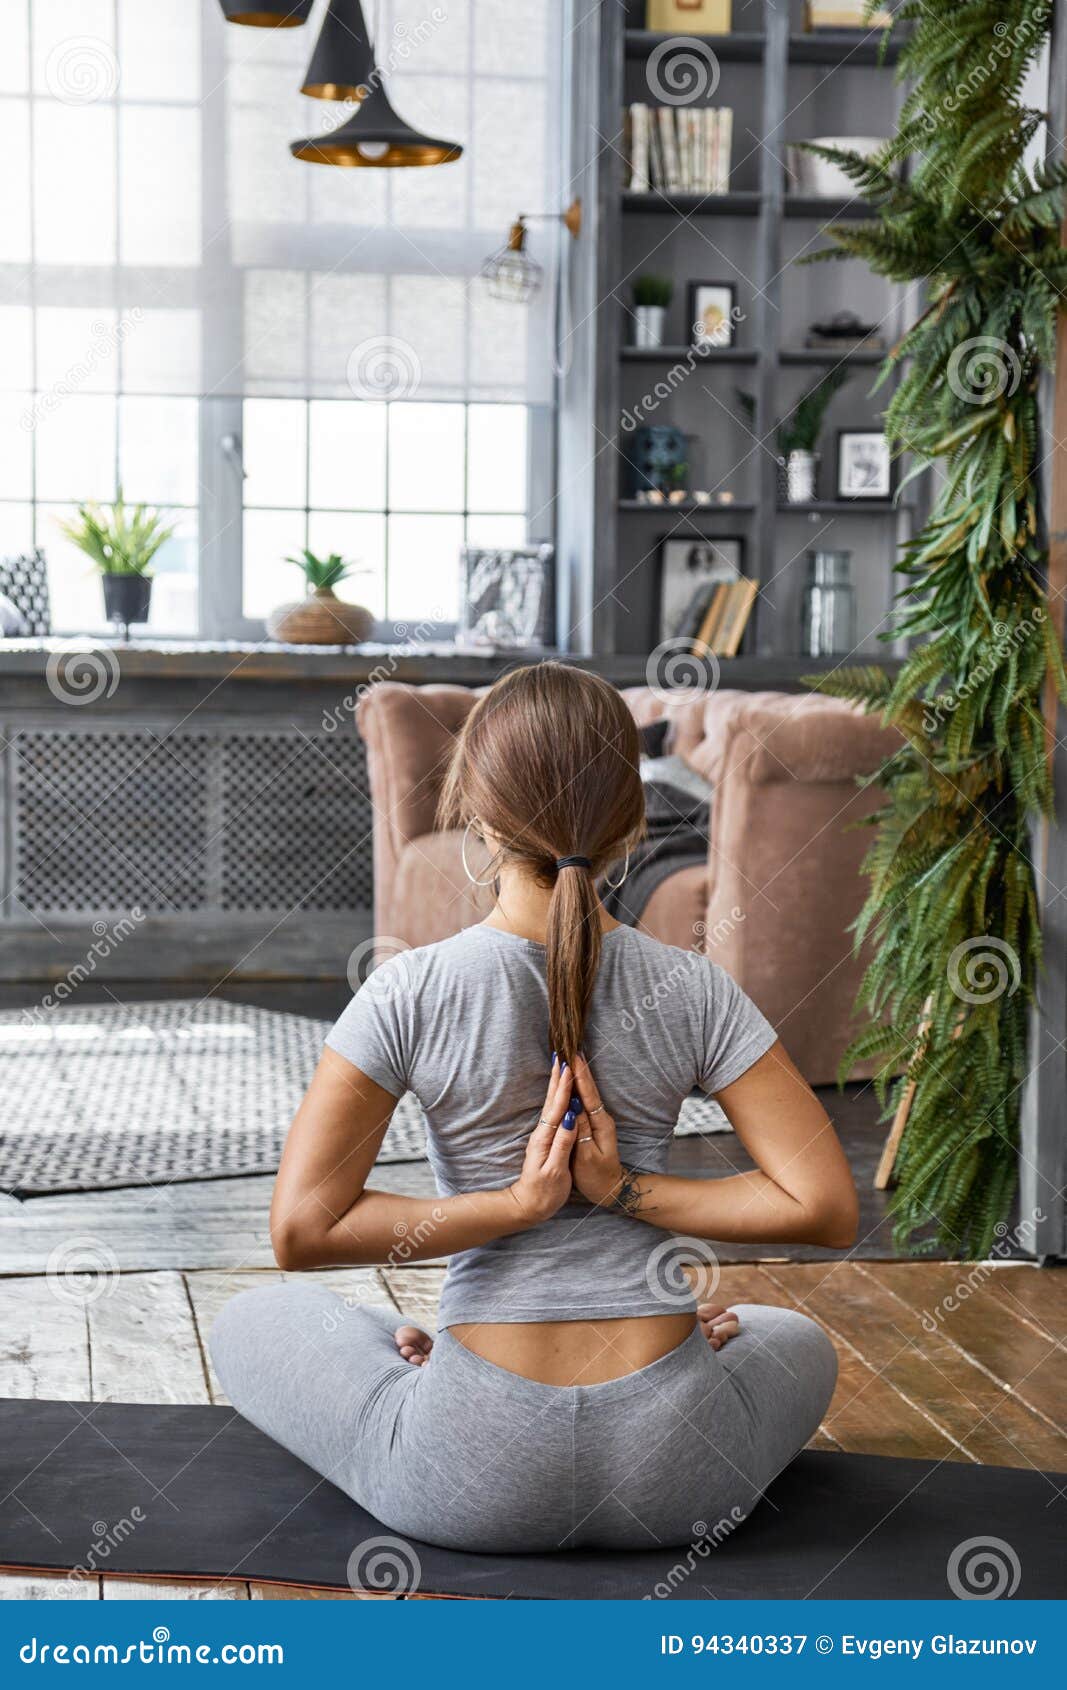 Young Woman Advanced Sitting Yoga Pose Stock Photo 136689017 | Shutterstock